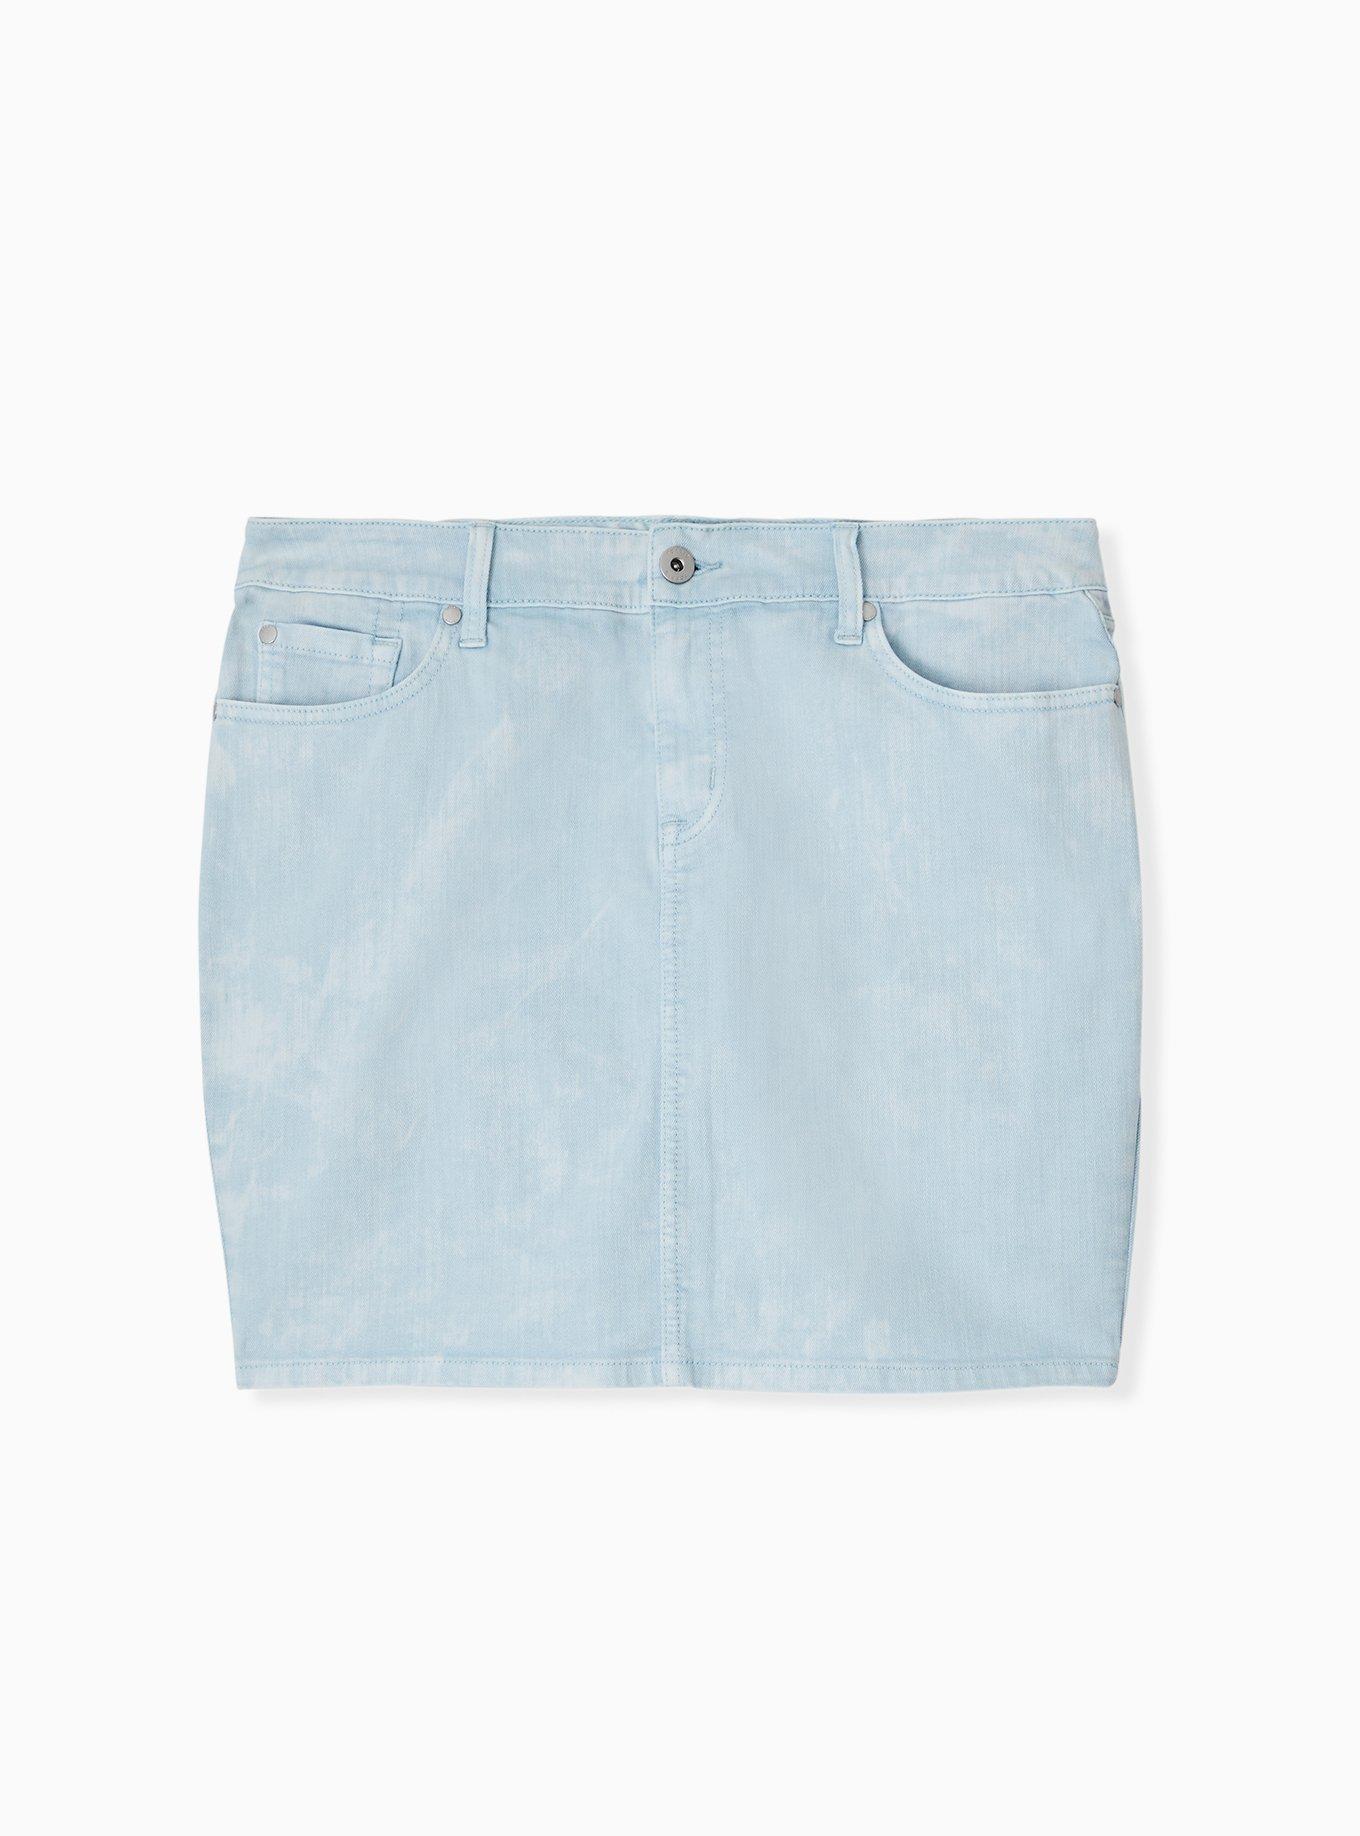 Plus Size - Denim Mini Skirt - Washed Light Blue - Torrid